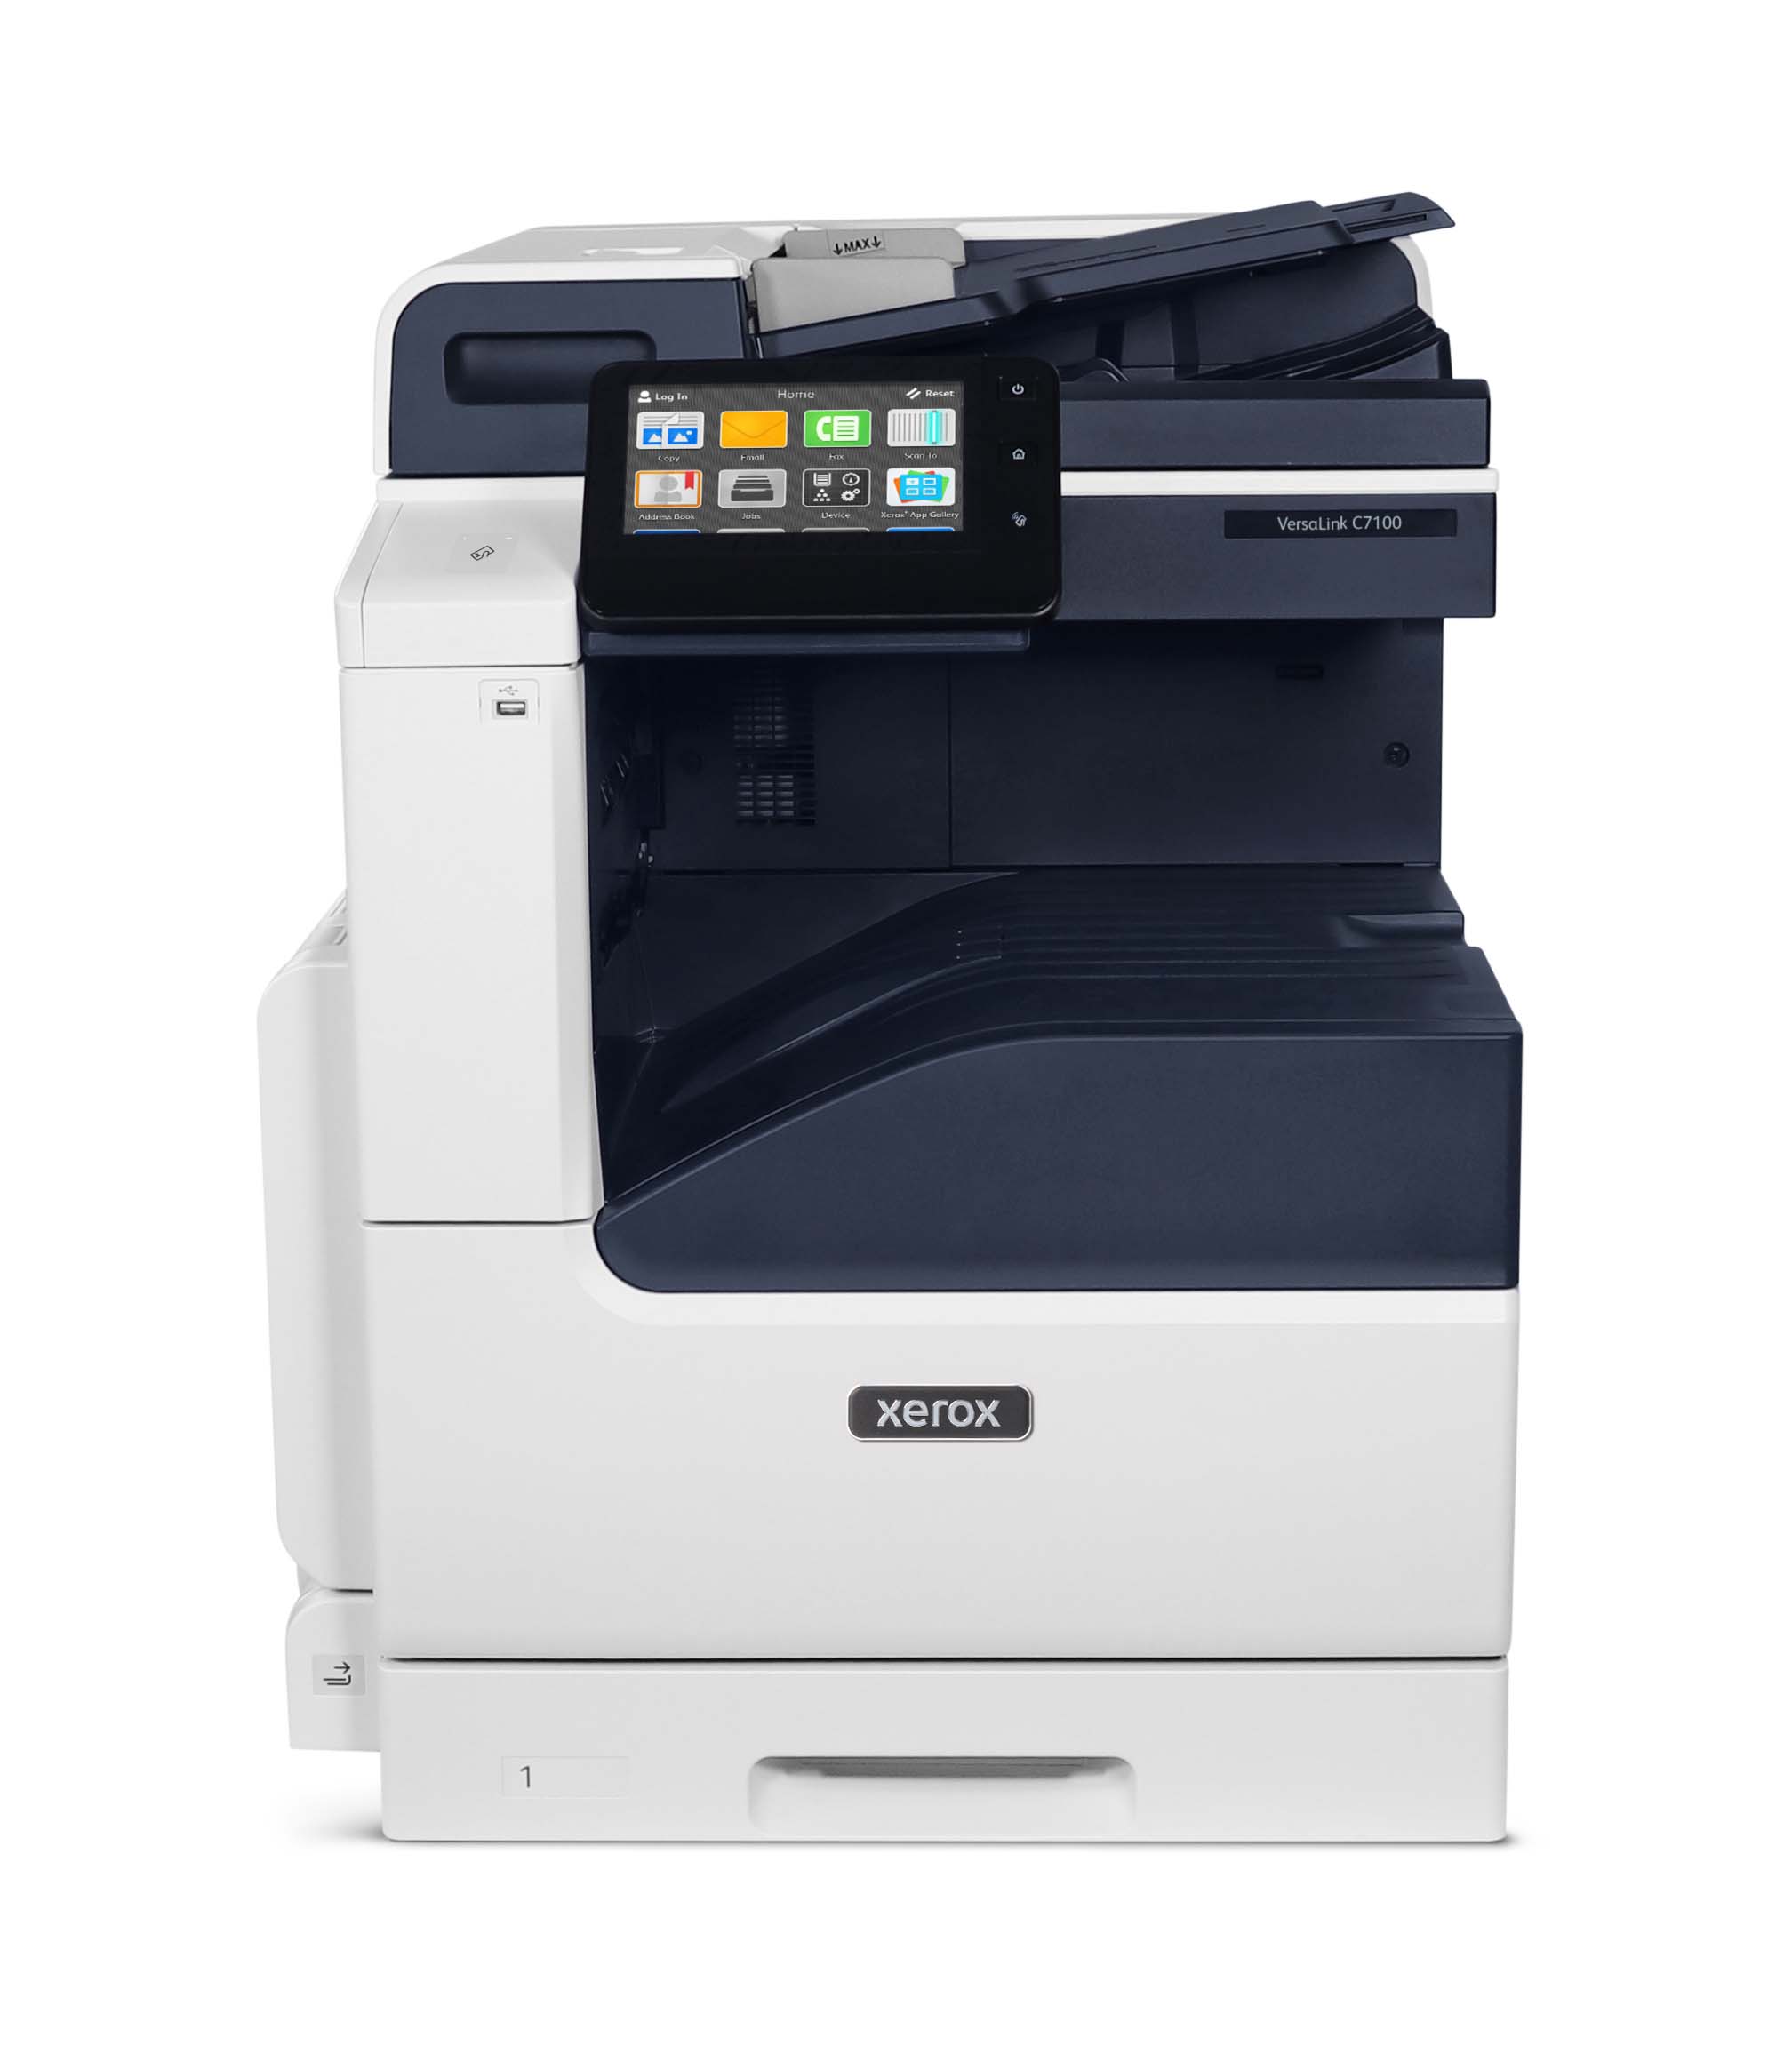 Xerox VersaLink C7130 Colour MultiFunction Printer - Desktop Single tray version